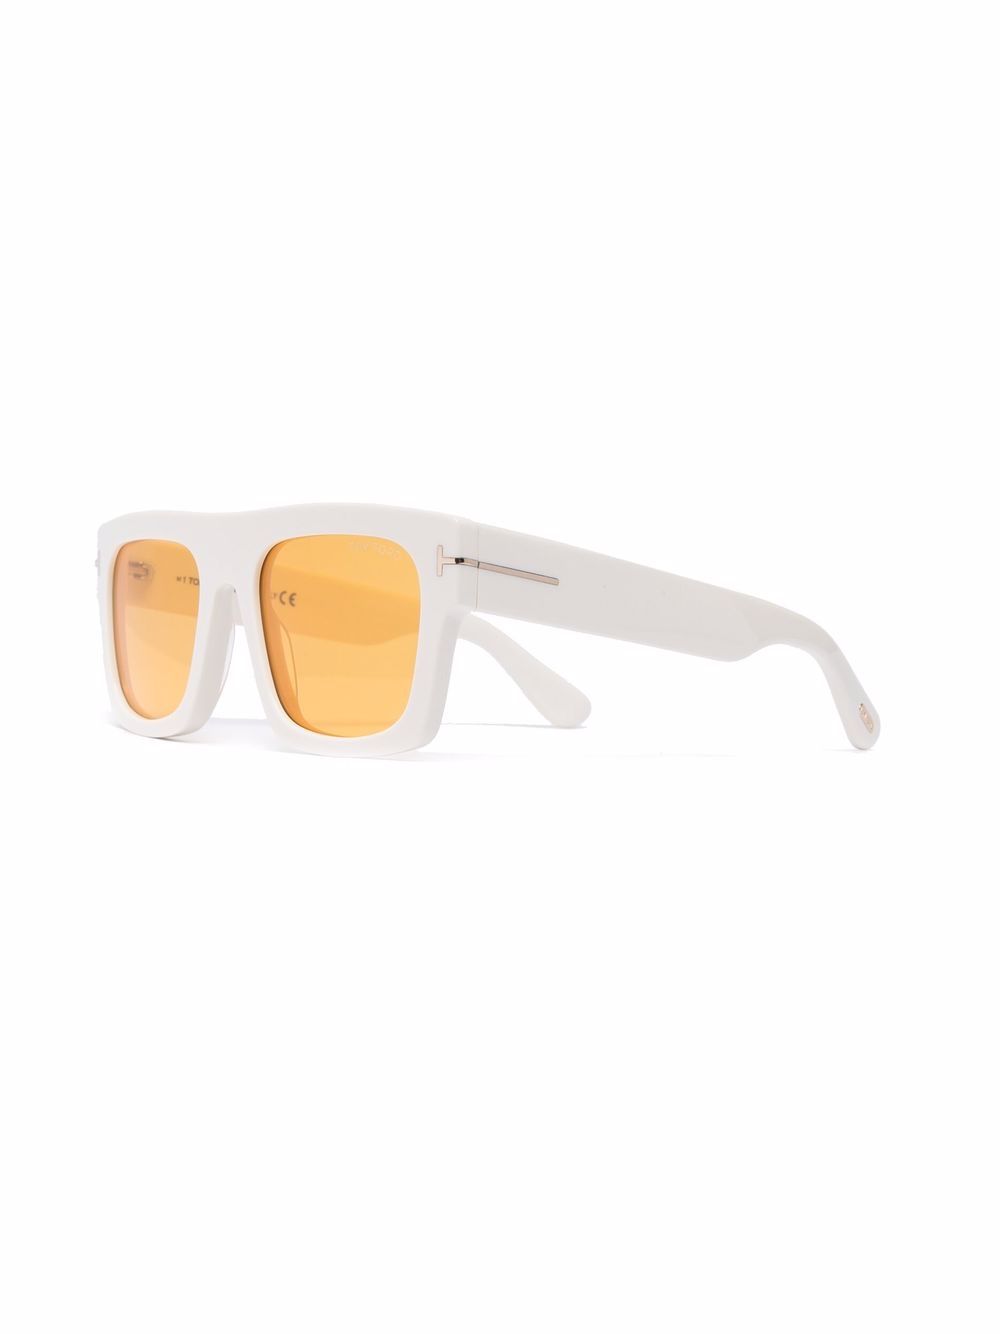 фото Tom ford eyewear солнцезащитные очки fausto